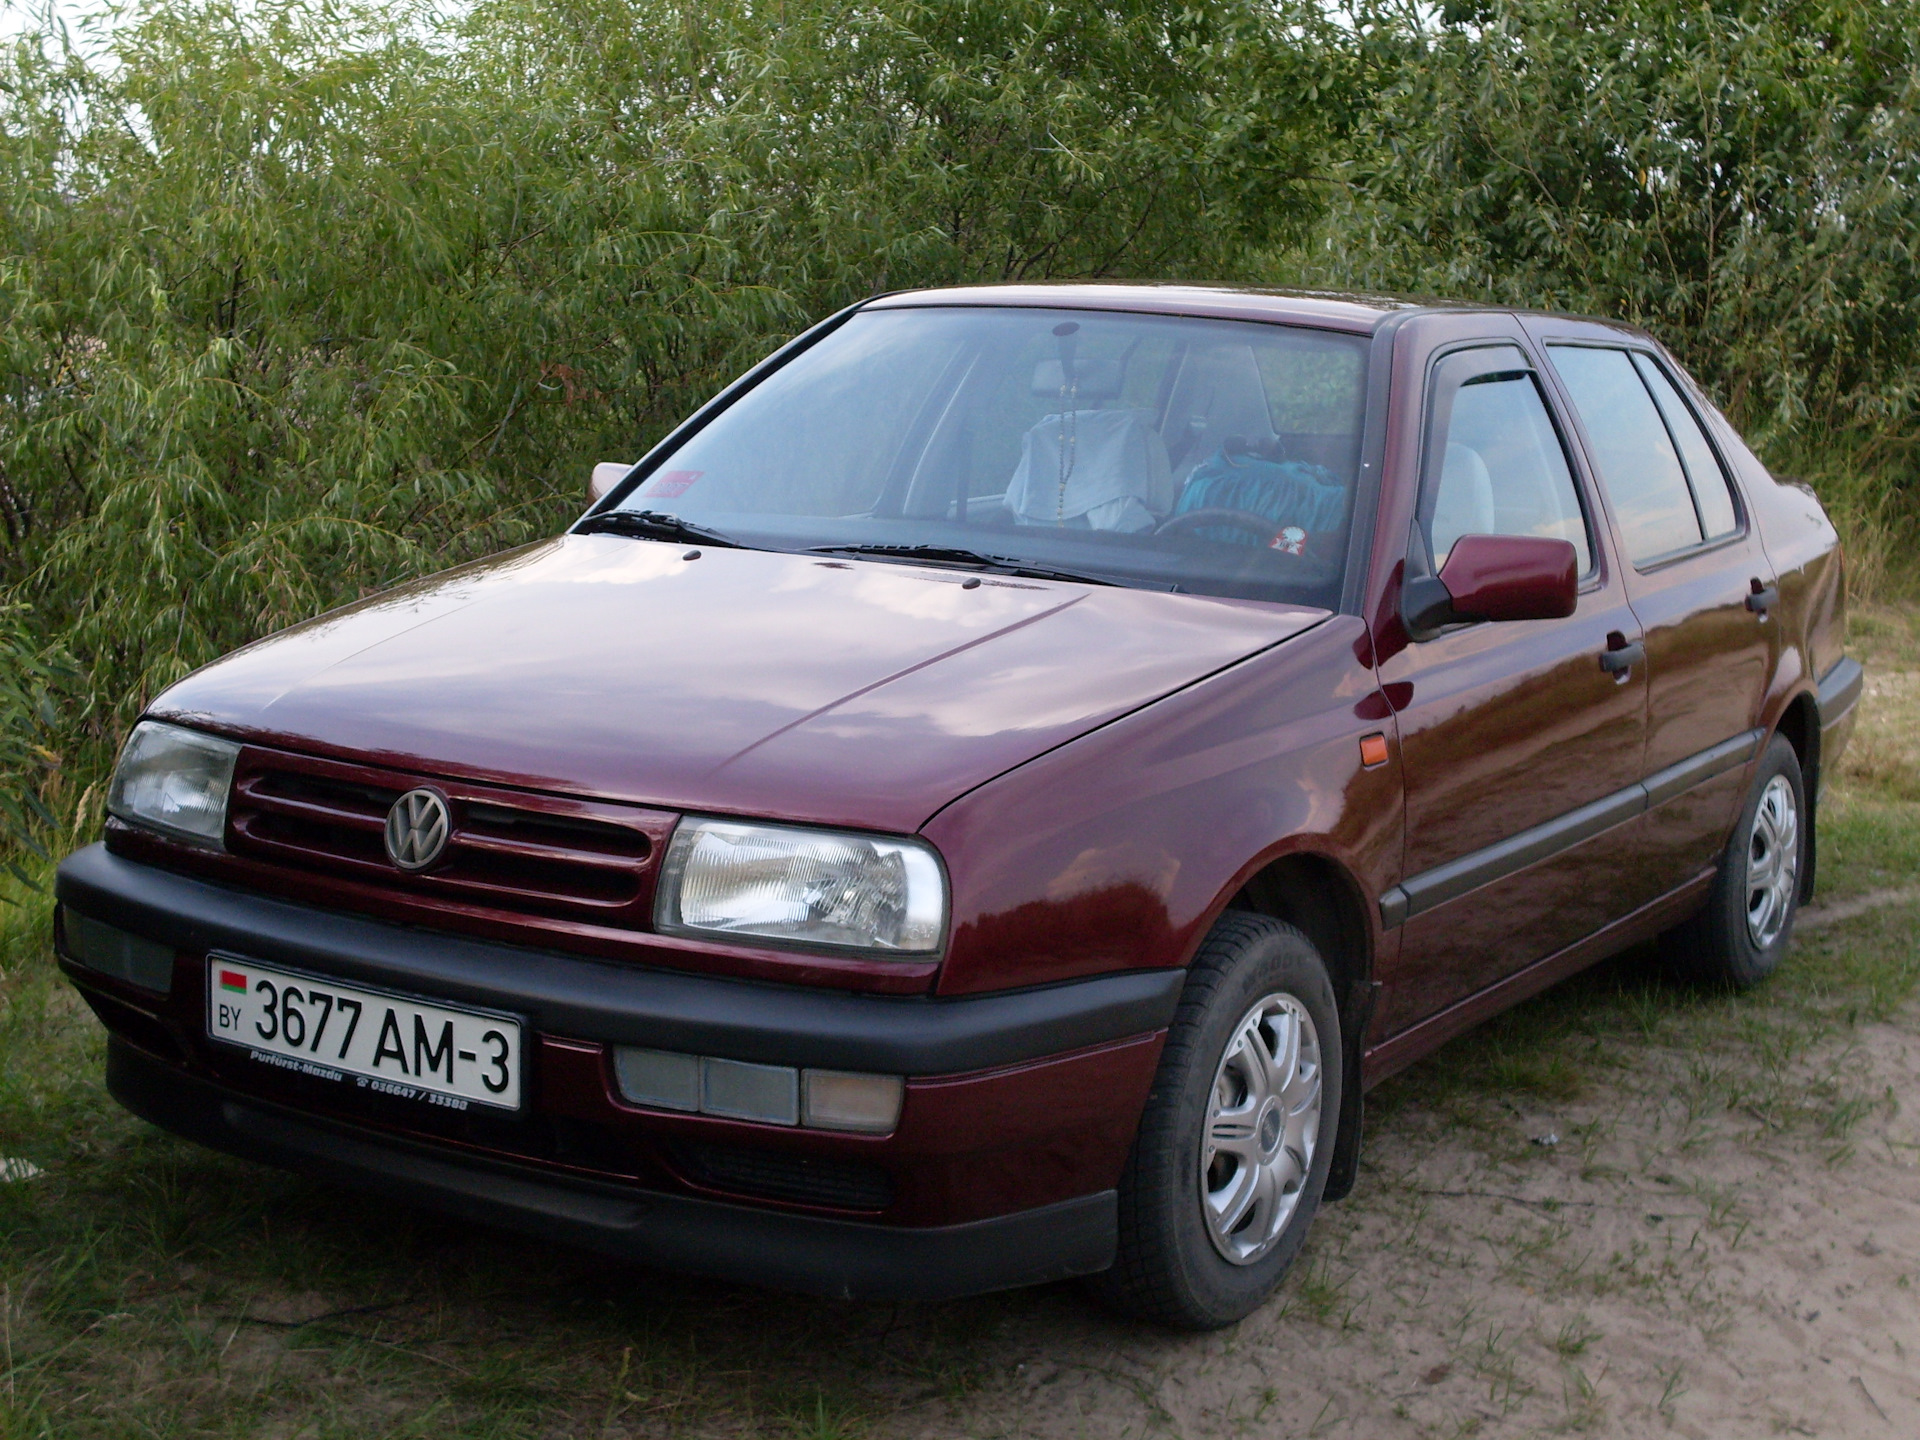 Volkswagen 1993. Фольксваген Венто 1993 1.8. VW Vento 1993. Фольксваген Пассат 1993. Фольксваген Вента 1993 года.